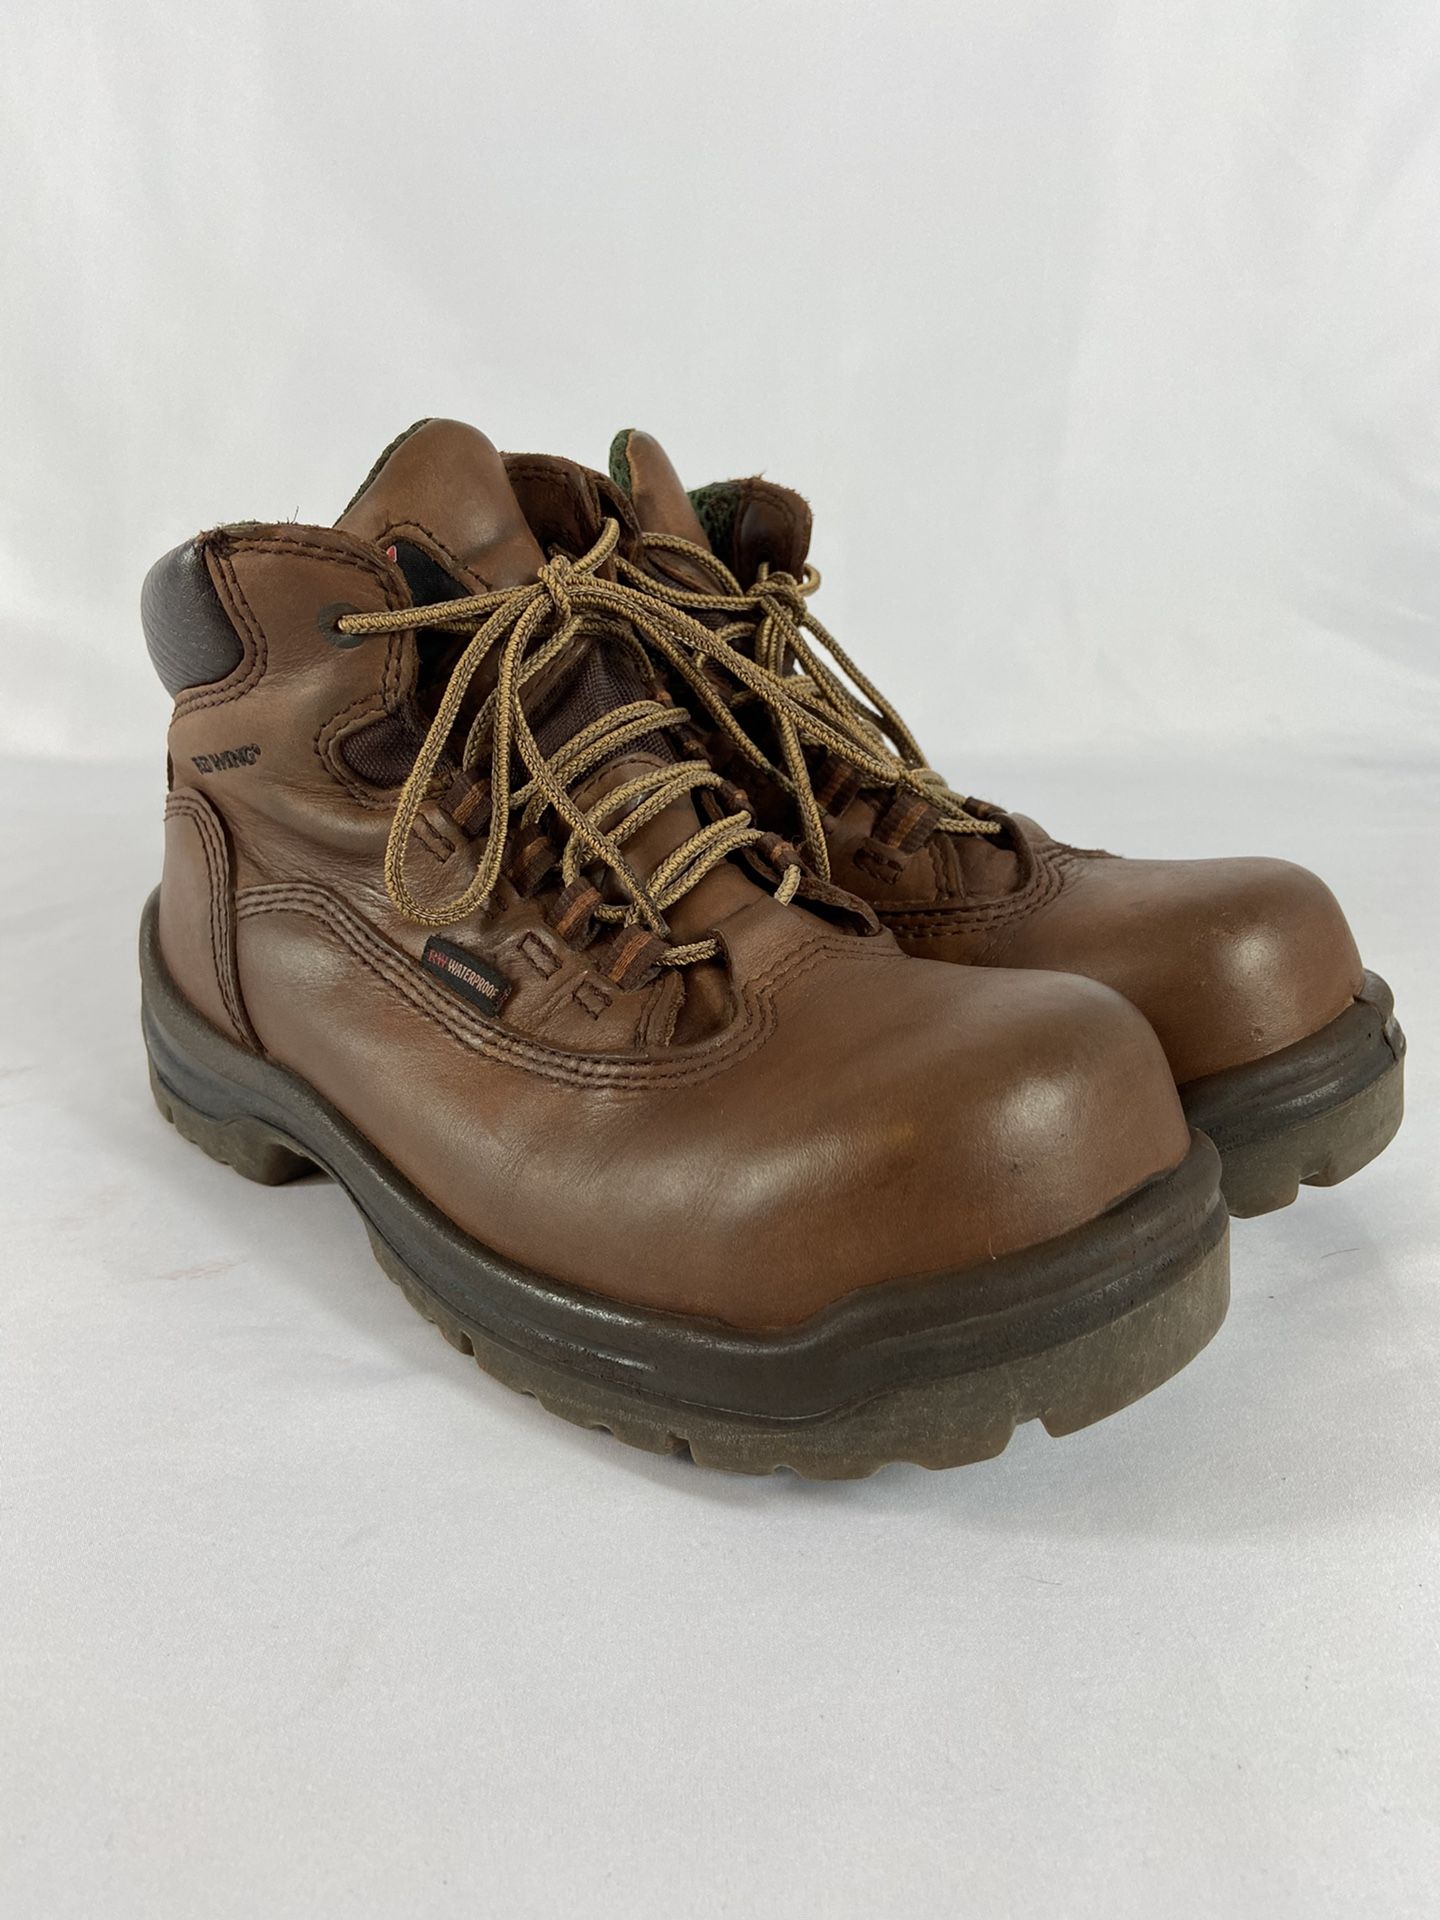 Redwing Steel Toe Womens Boot Size 7.5 B. Oil Resistant Sole, Water Proof Upper